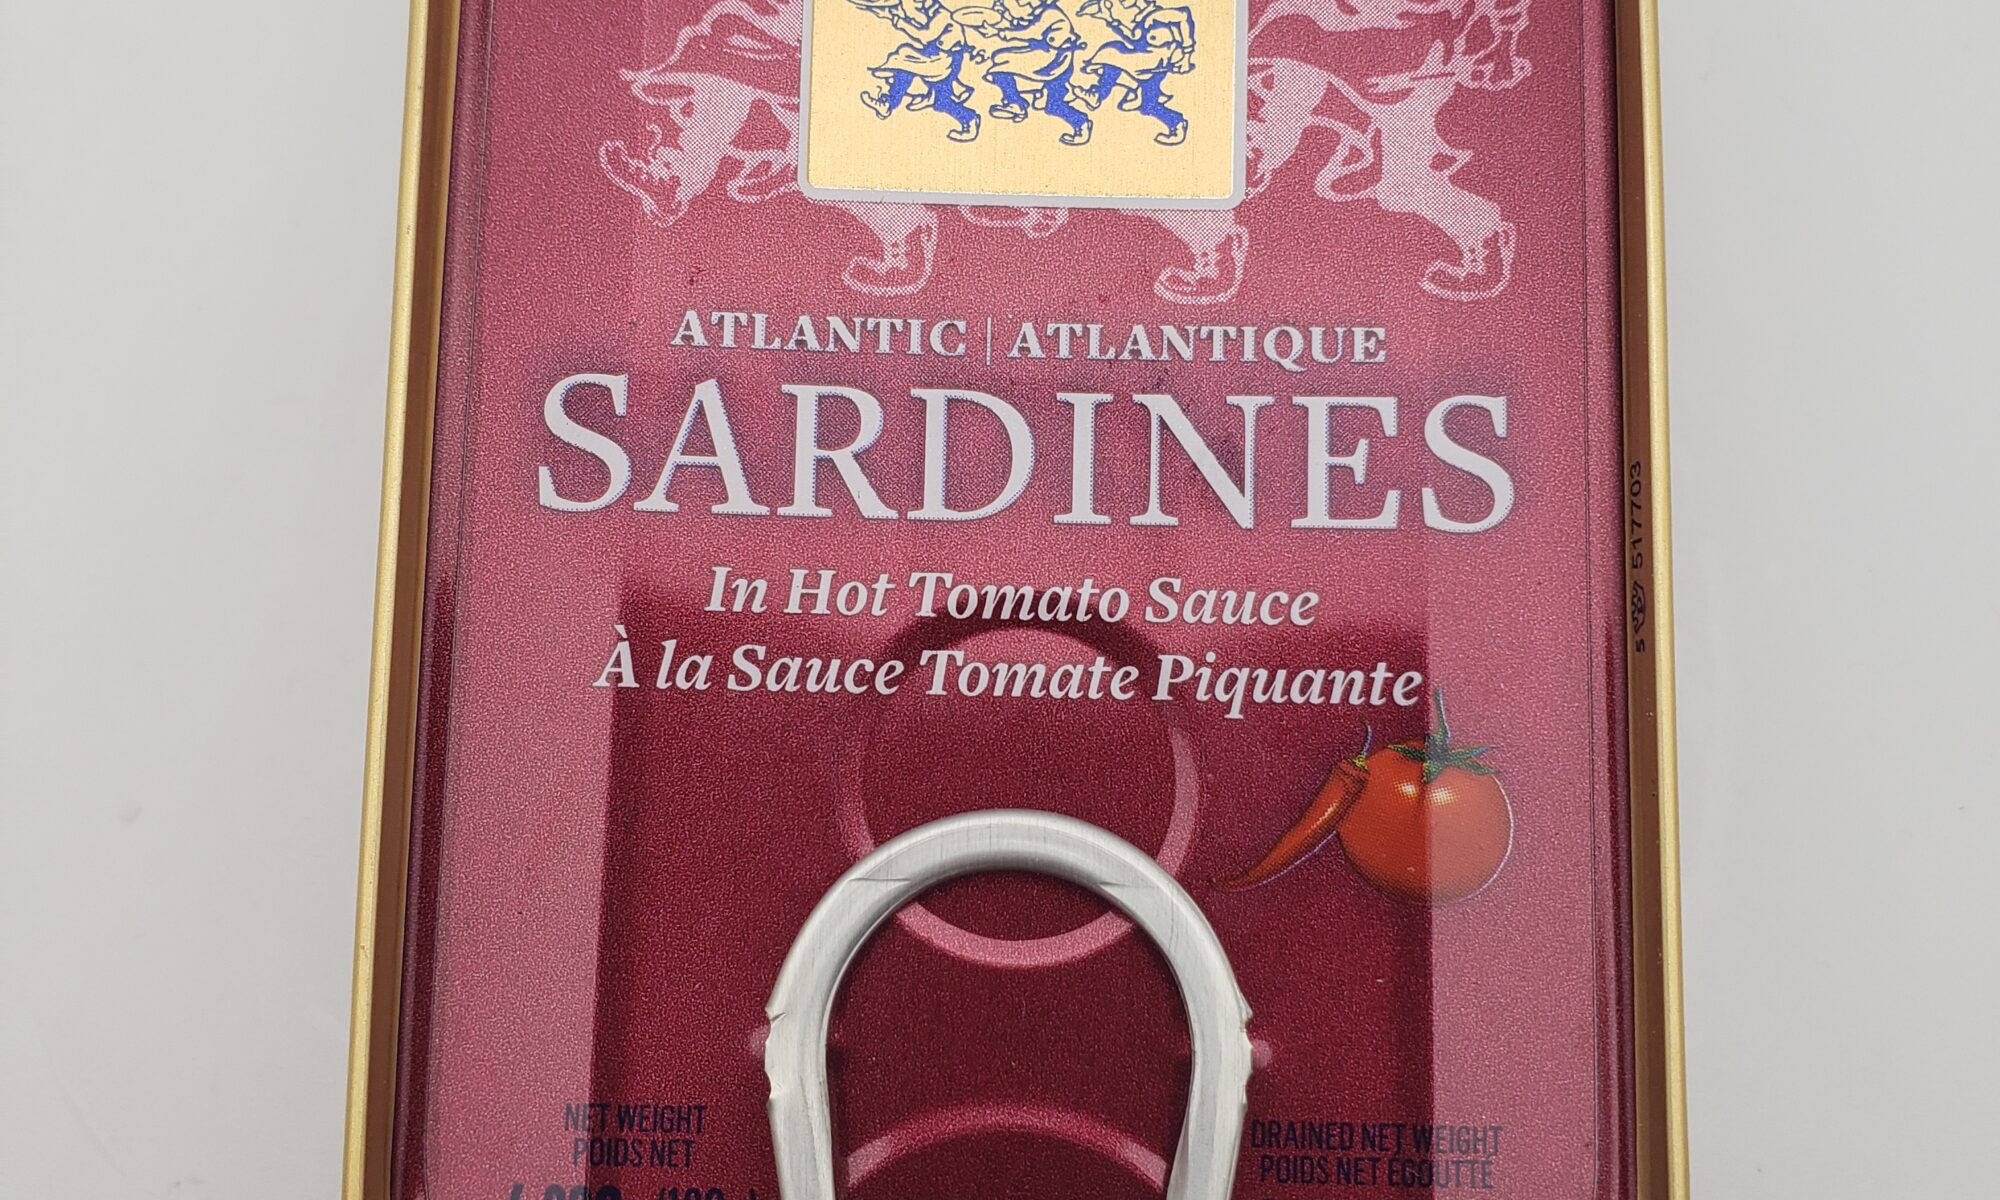 Image of bon appetit sardines with hot tomato sauce